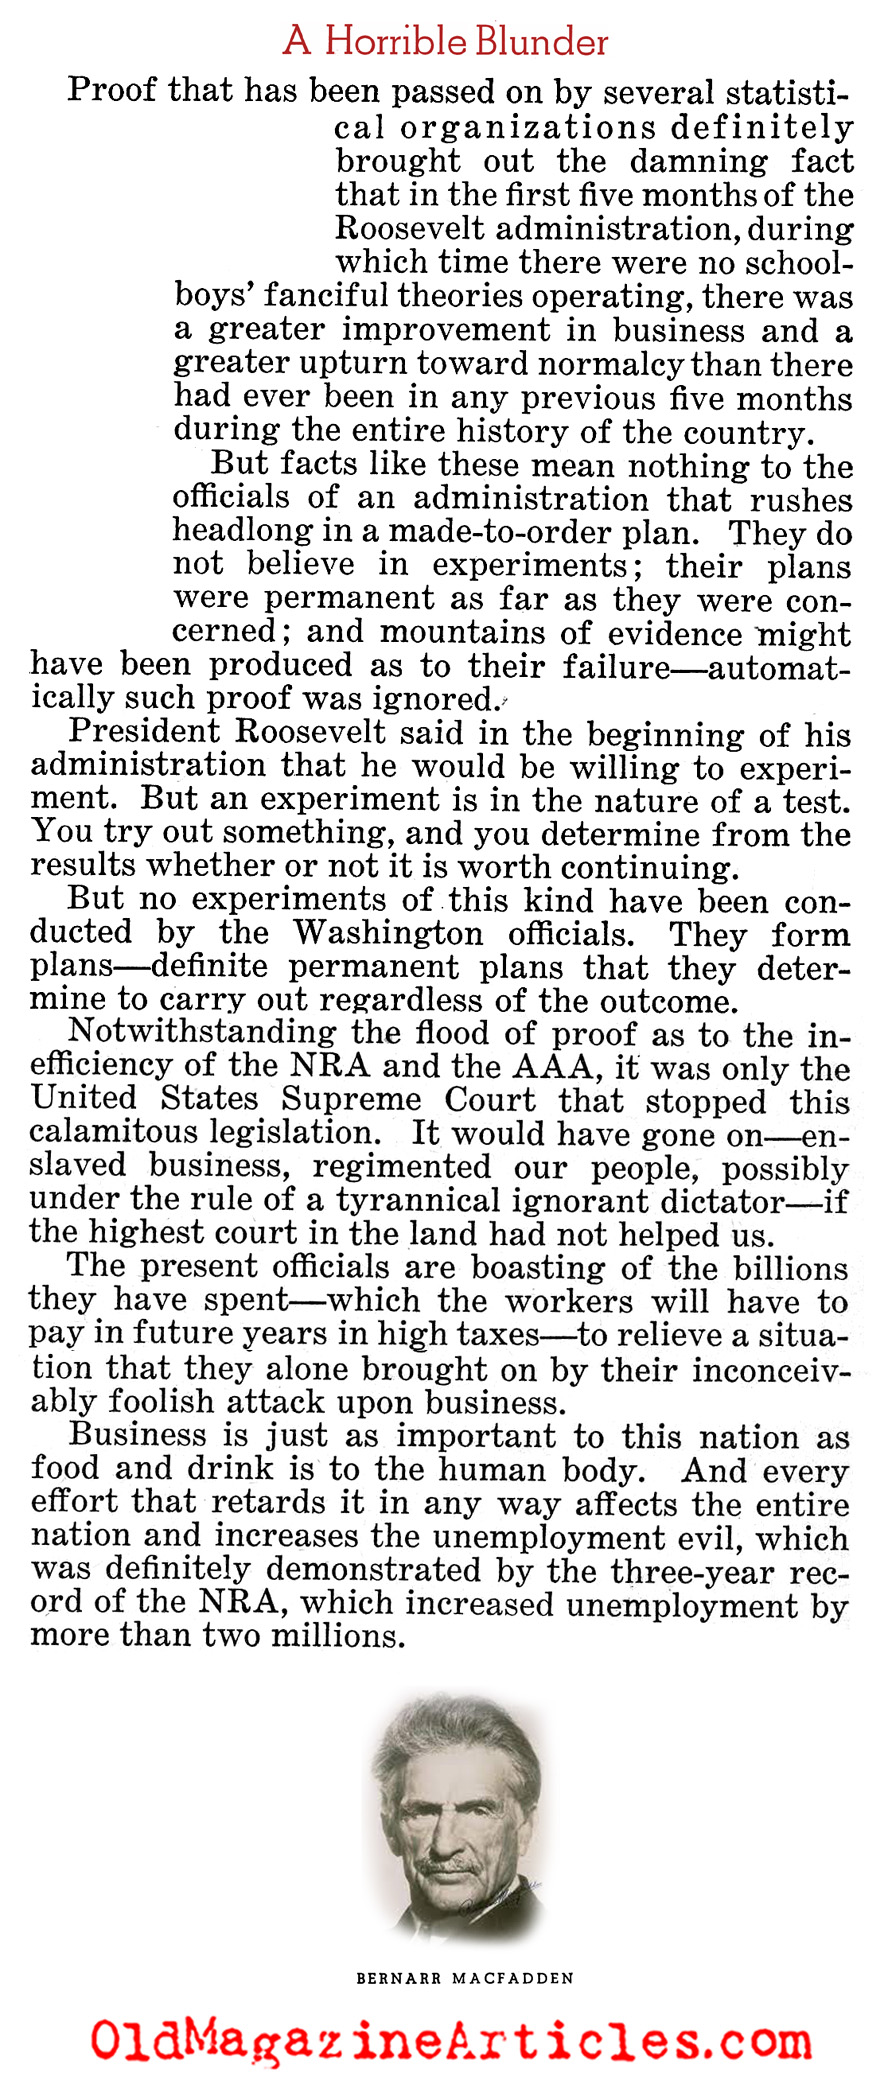 Damaging Businesses was not Helpful (Liberty Magazine, 1936)